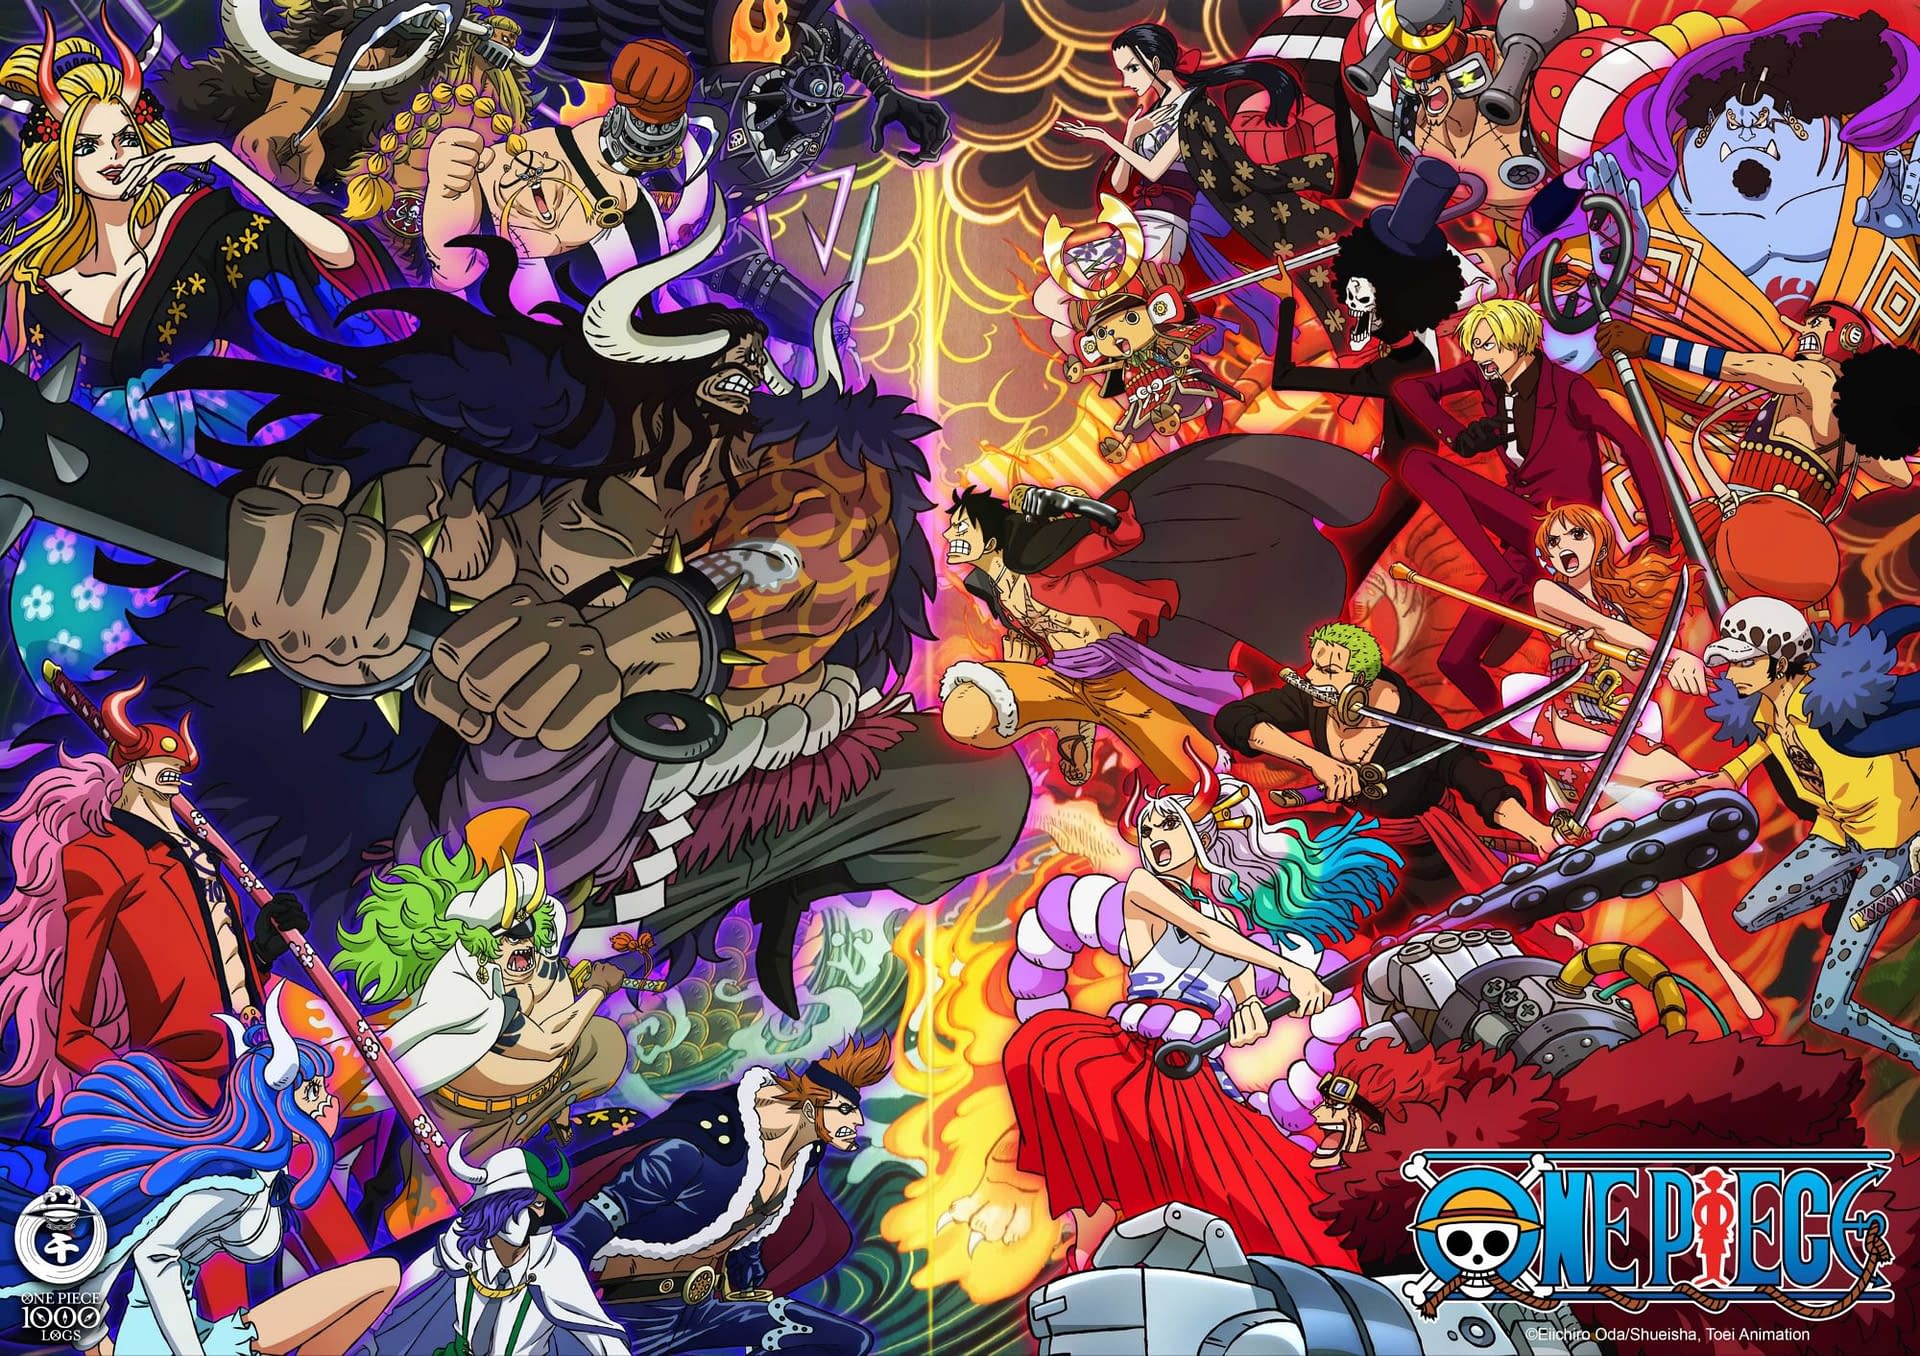 Crunchyroll - Key art for the new One Piece arc, starting